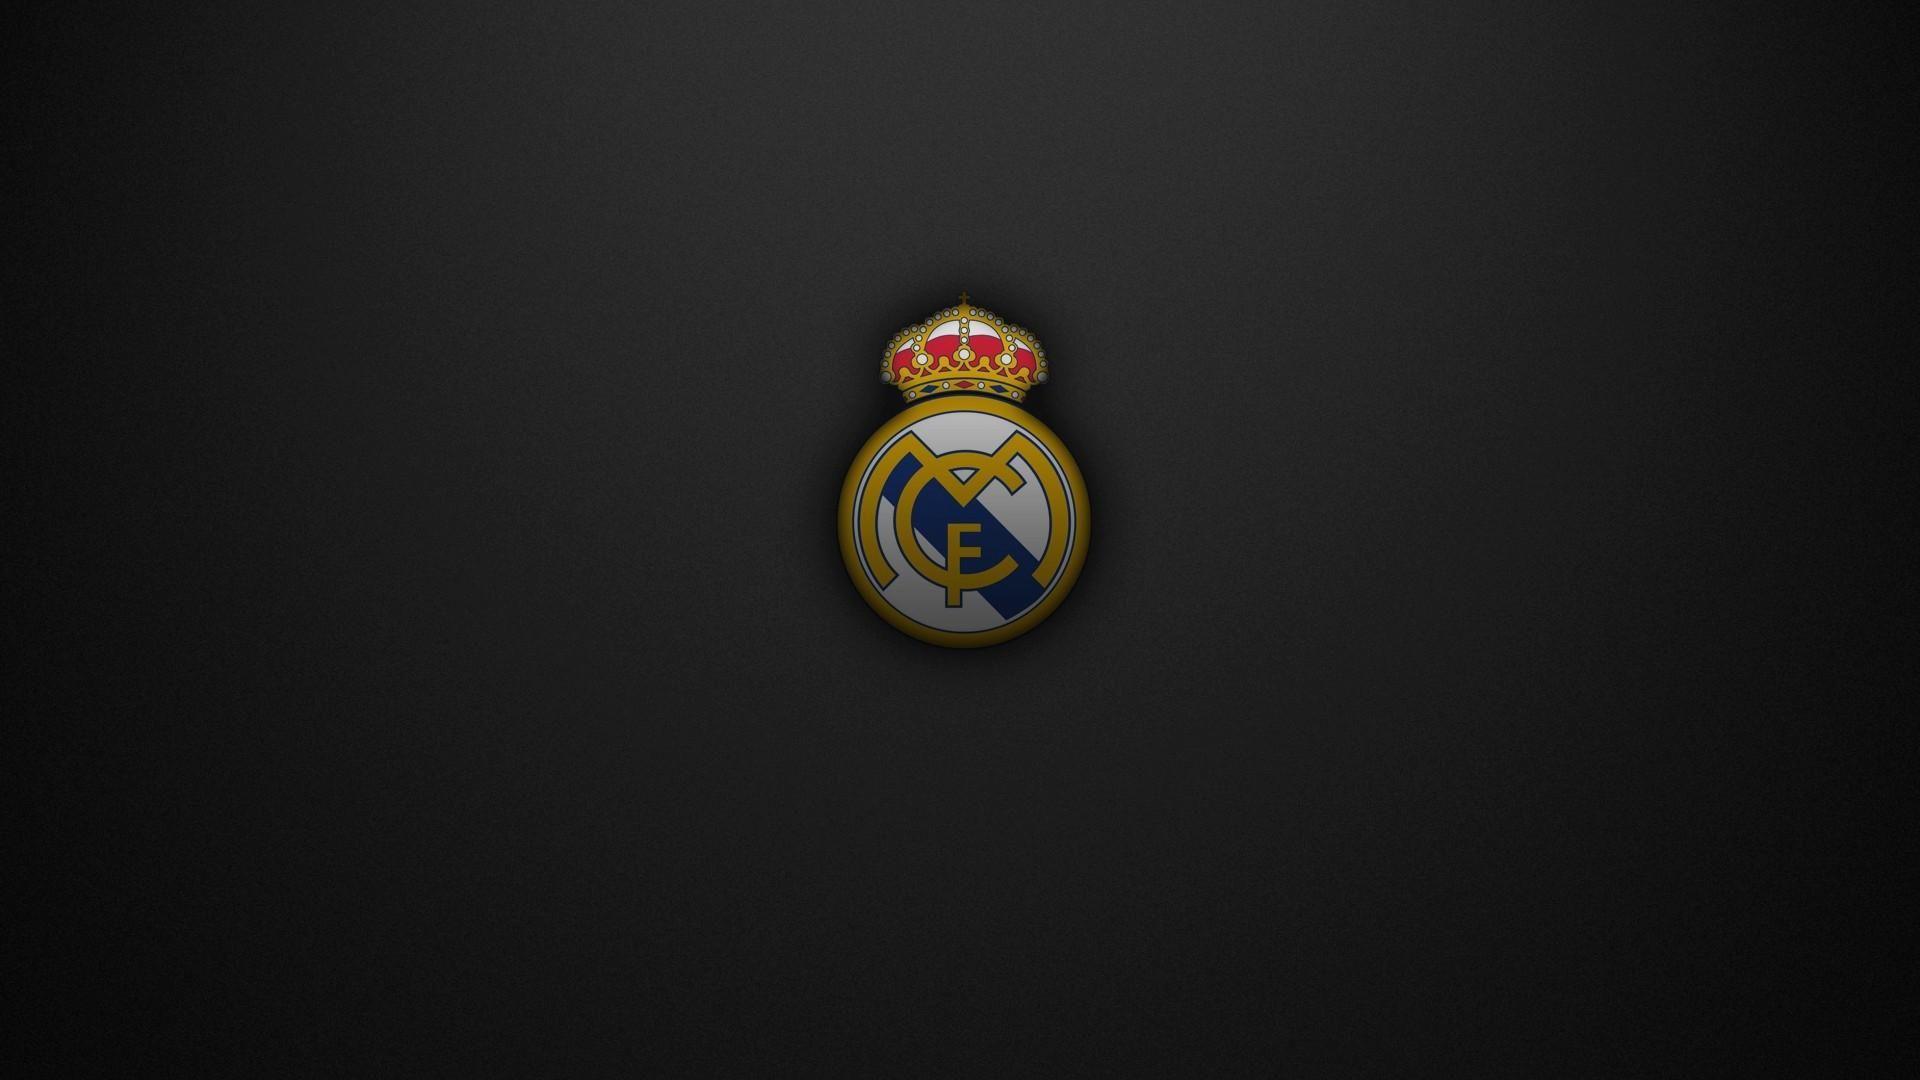 Real Madrid Club De Fútbol Logo Live Wallpaper HD. Real madrid wallpaper, Madrid wallpaper, Real madrid logo wallpaper